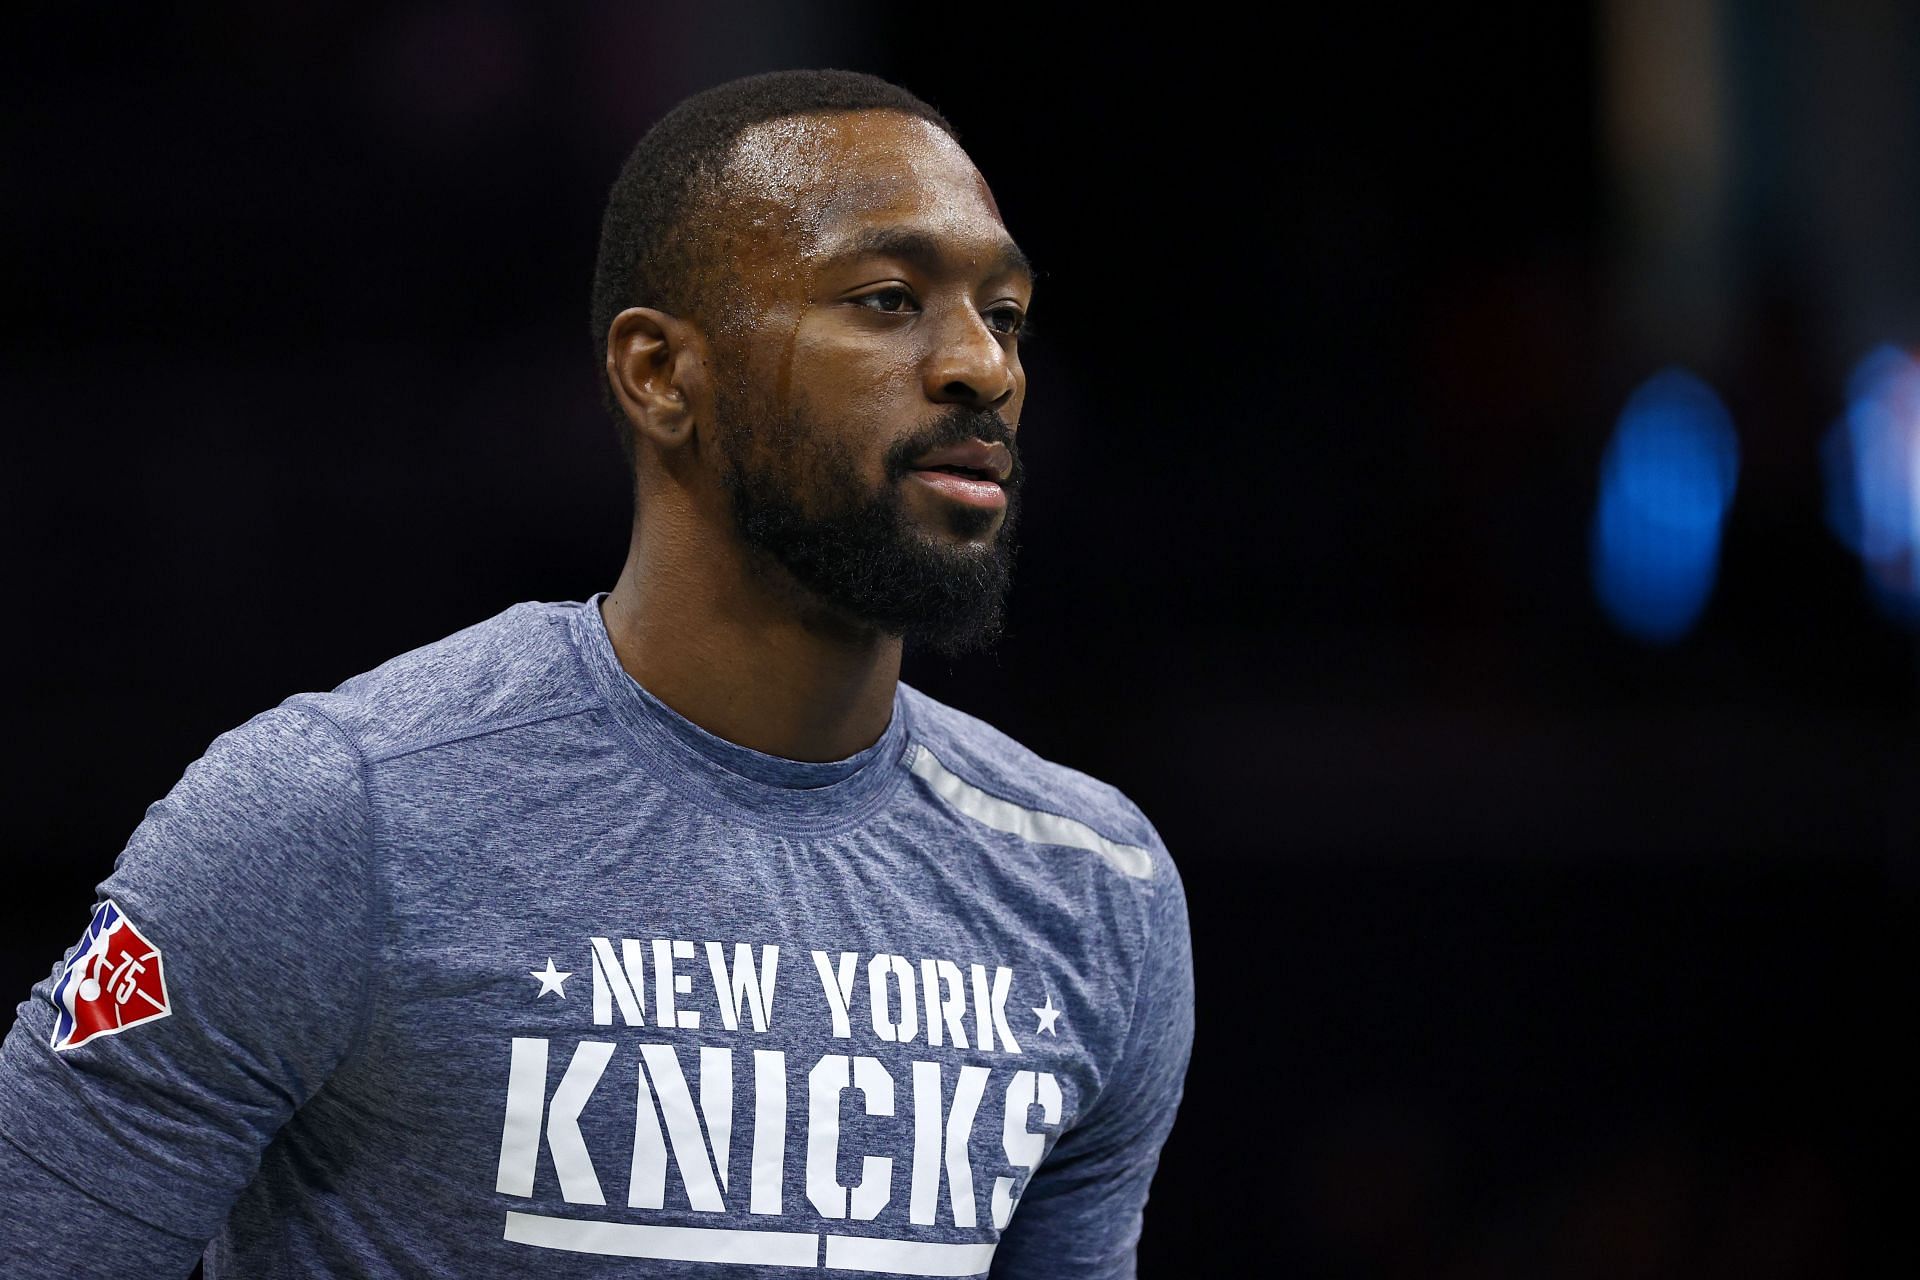 New York Knicks guard Kemba Walker has struggled as of late